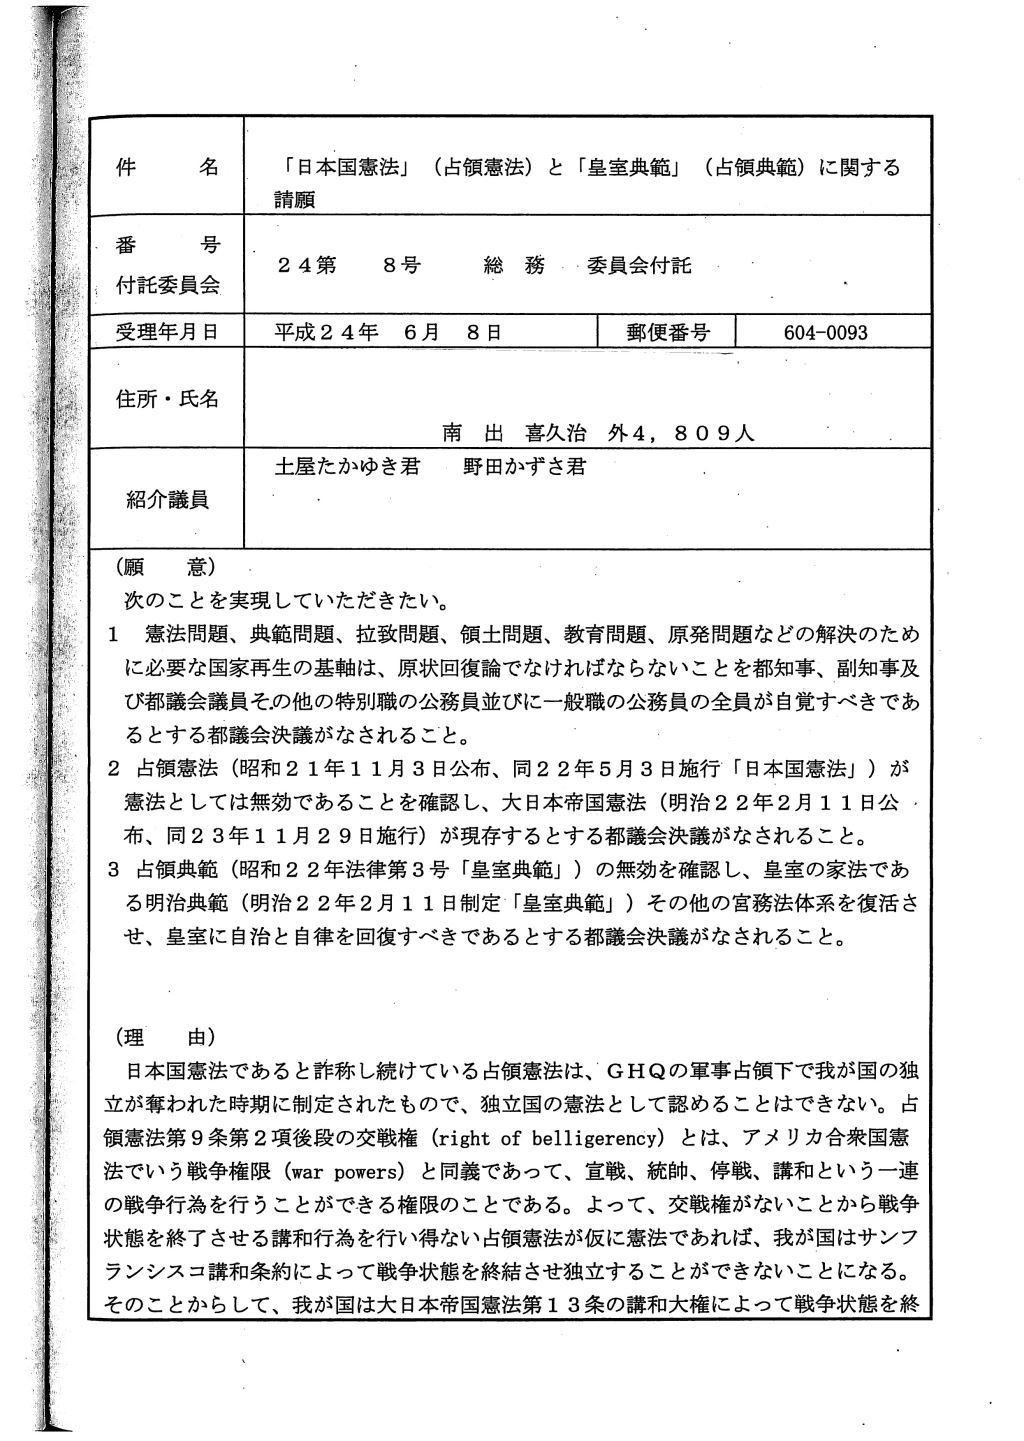 W1024Q80_2012年6月8日日本国憲法と皇室典範に関する請願_PAGE0000